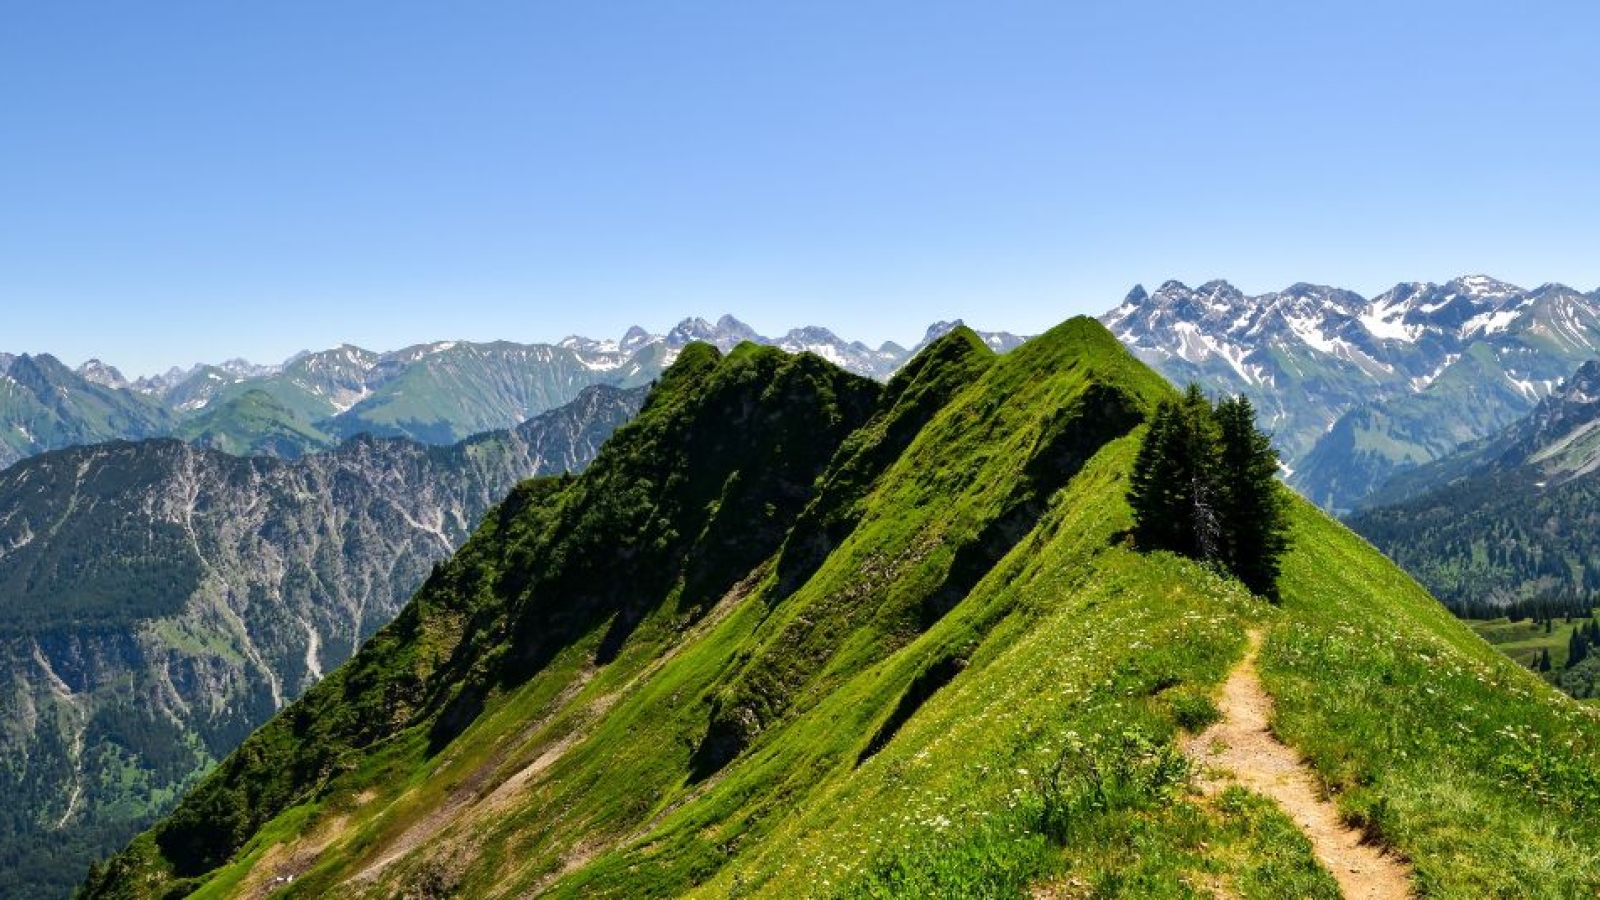 3. Mountain passes in Austria